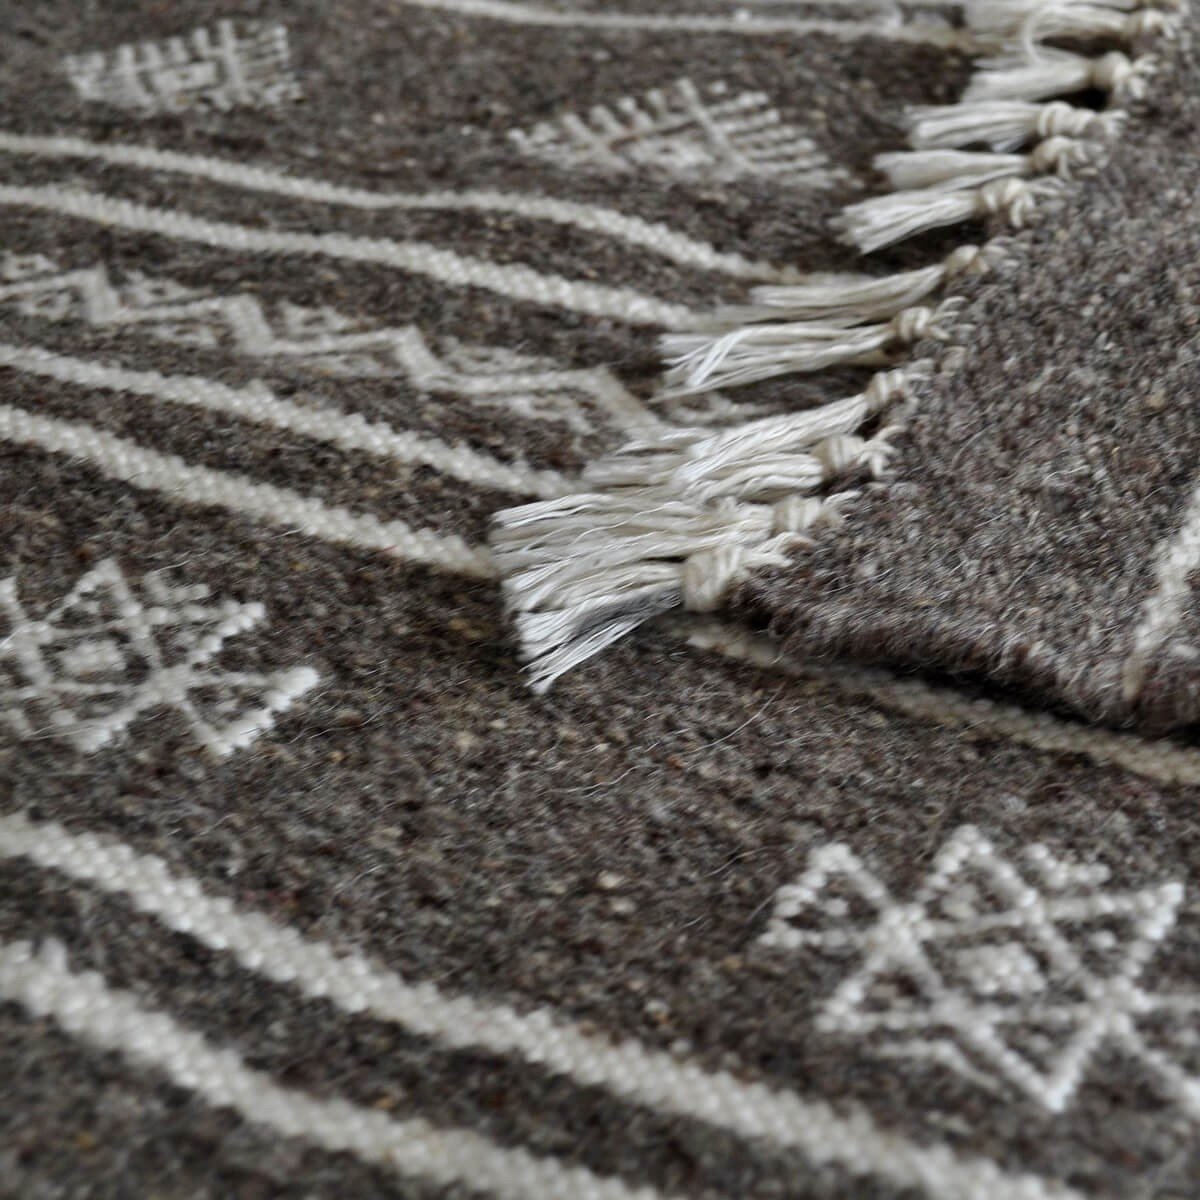 Berber carpet Rug Kilim Mizza 65x115 Grey/White (Handmade, Wool, Tunisia) Tunisian Rug Kilim style Moroccan rug. Rectangular car